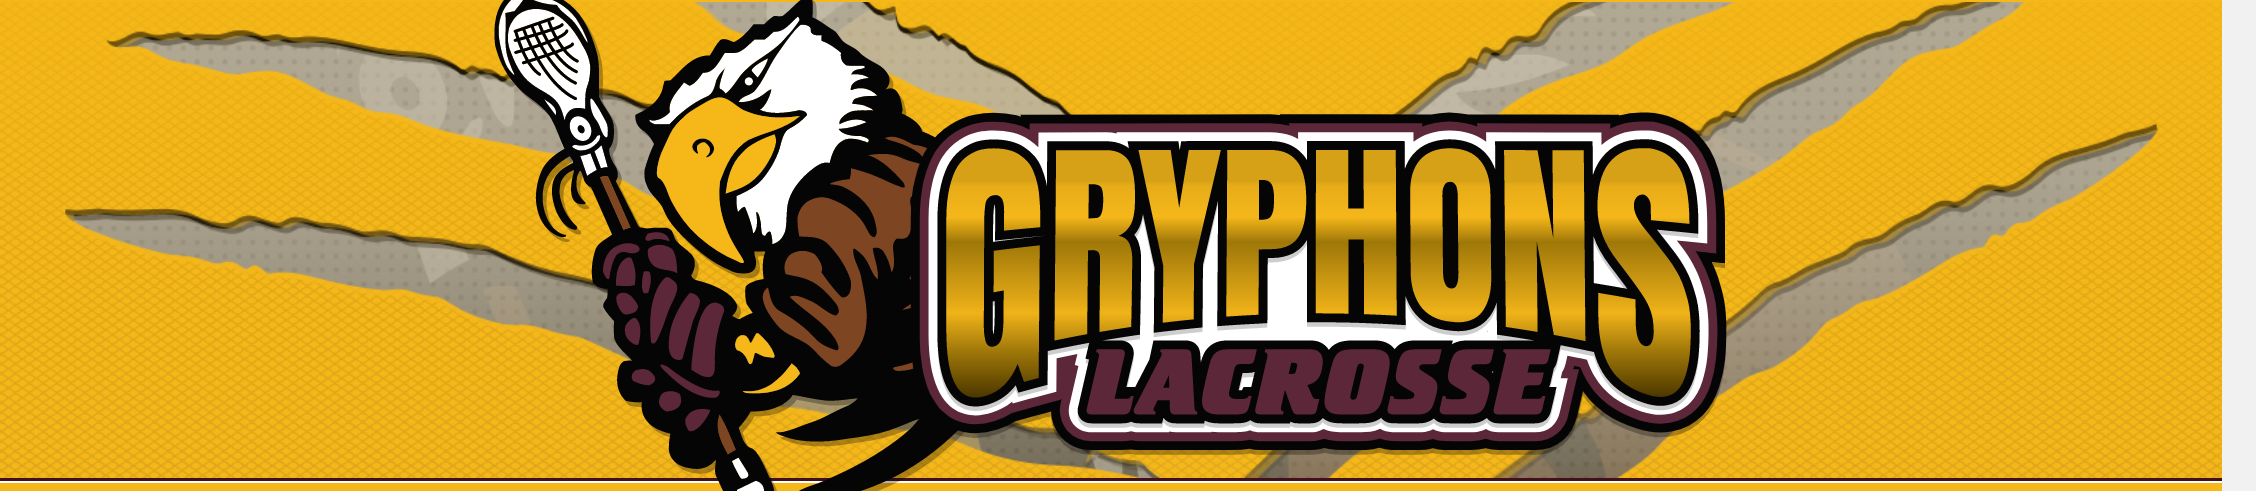 Gryphons Lacross